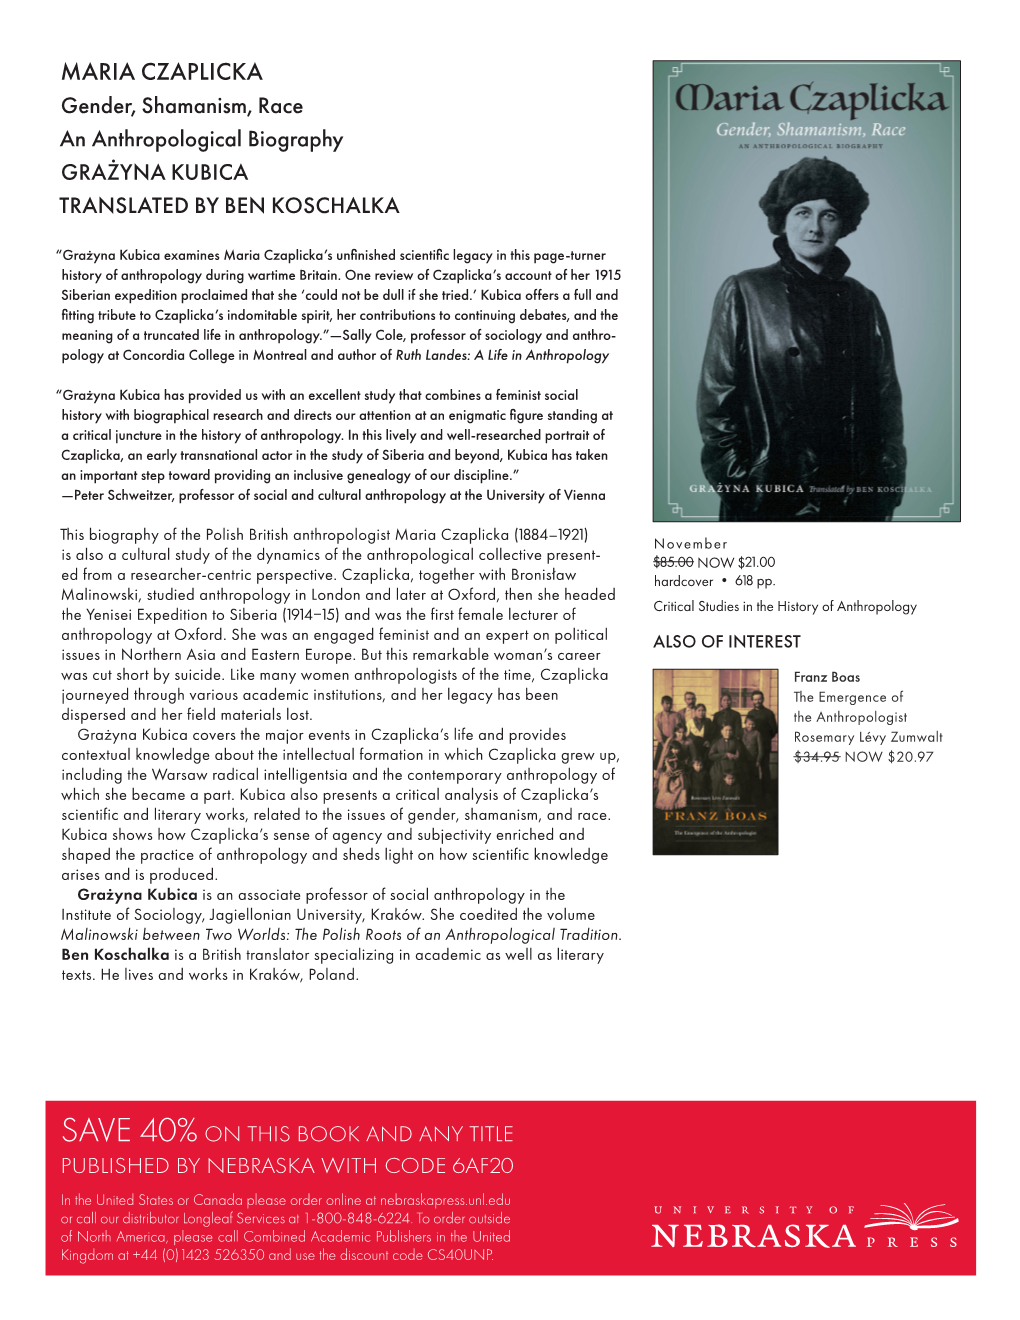 MARIA CZAPLICKA Gender, Shamanism, Race an Anthropological Biography GRAŻYNA KUBICA TRANSLATED by BEN KOSCHALKA